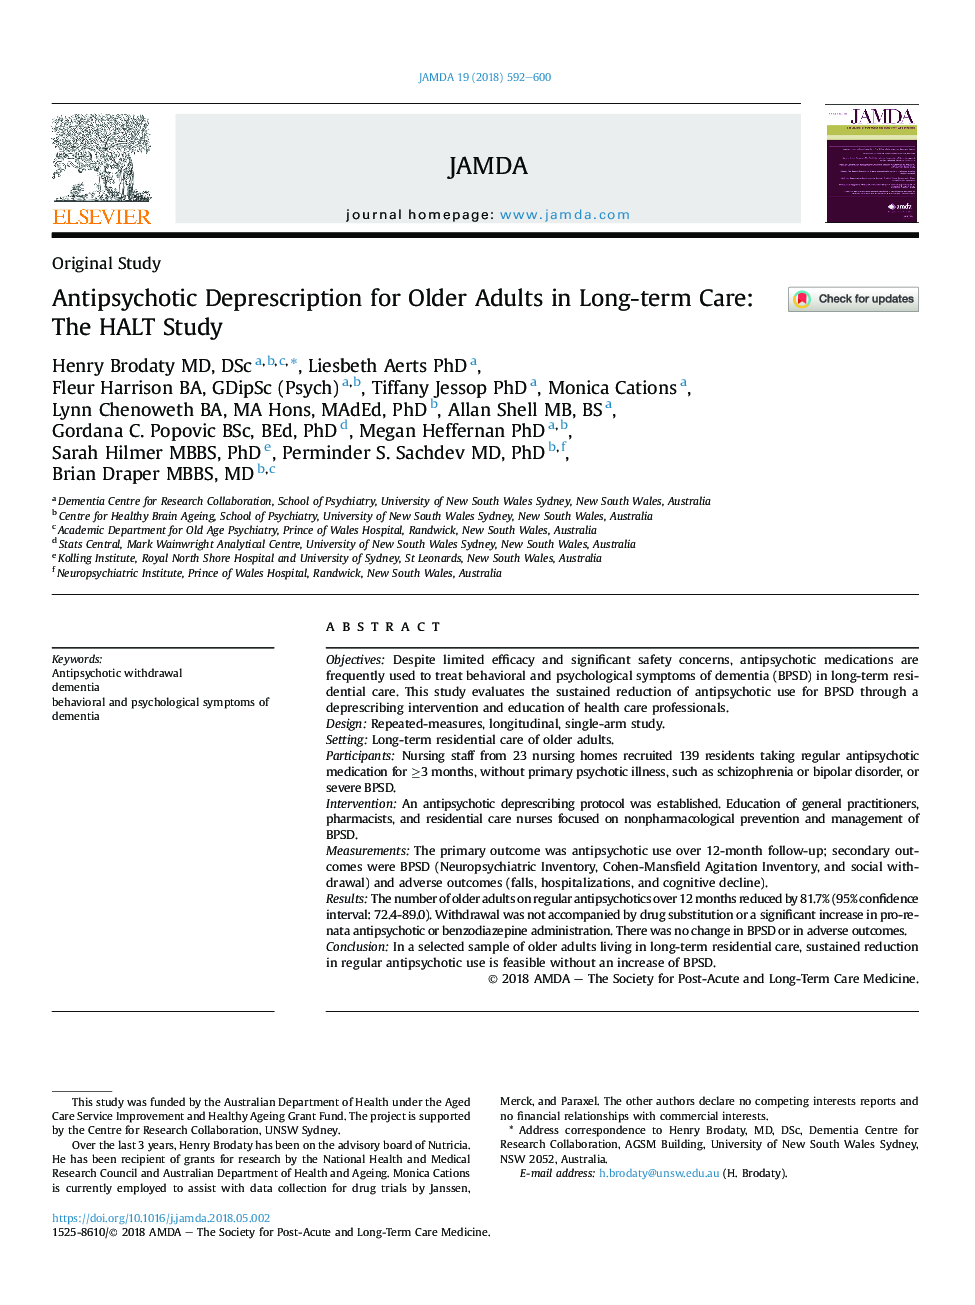 Antipsychotic Deprescription for Older Adults in Long-term Care: The HALT Study